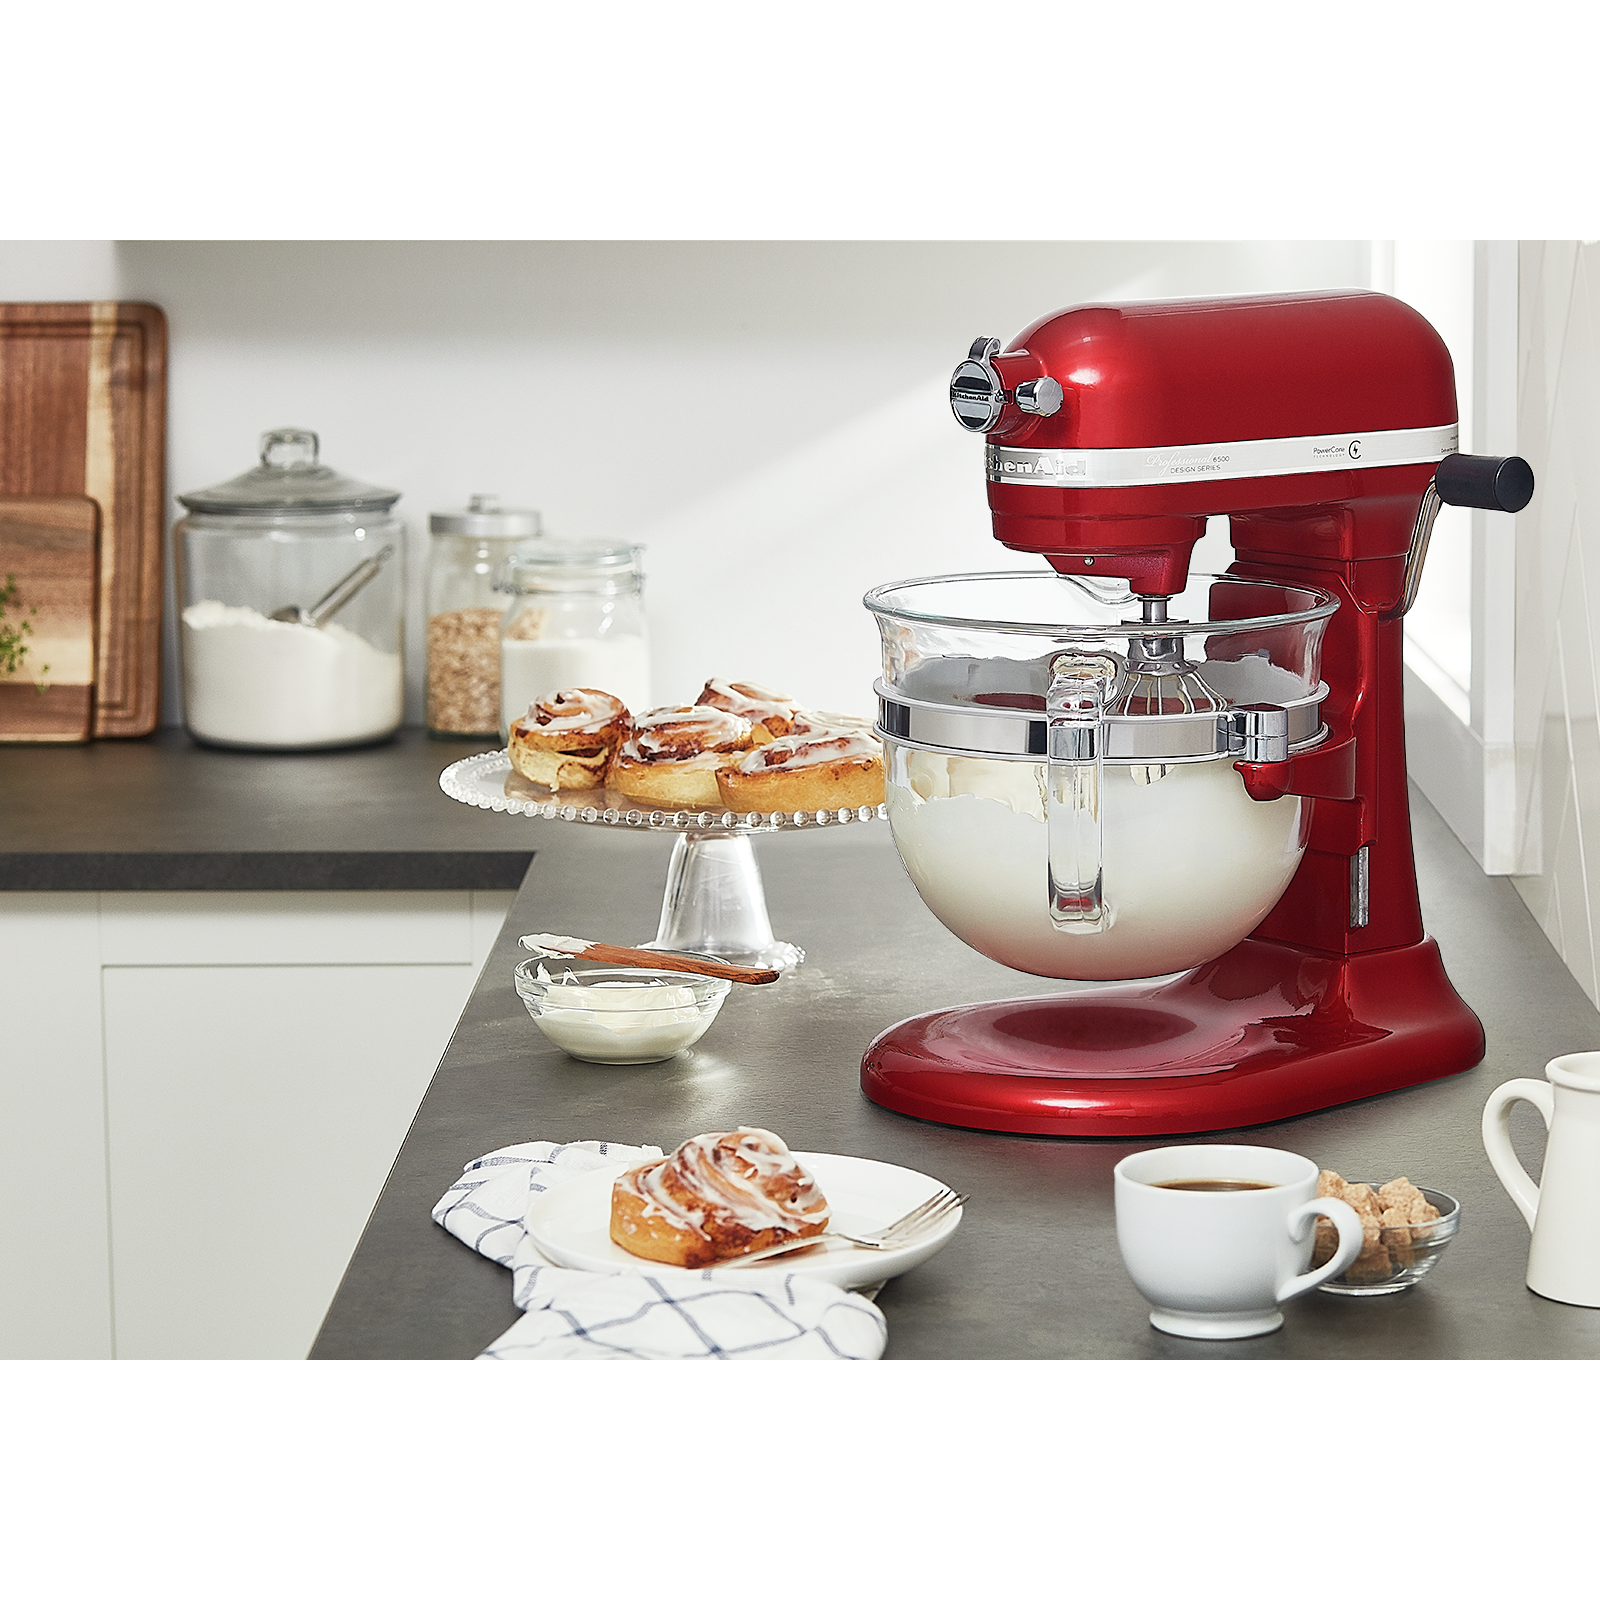 KitchenAid Professional 6500 Design Series Mixer Review - Consumer